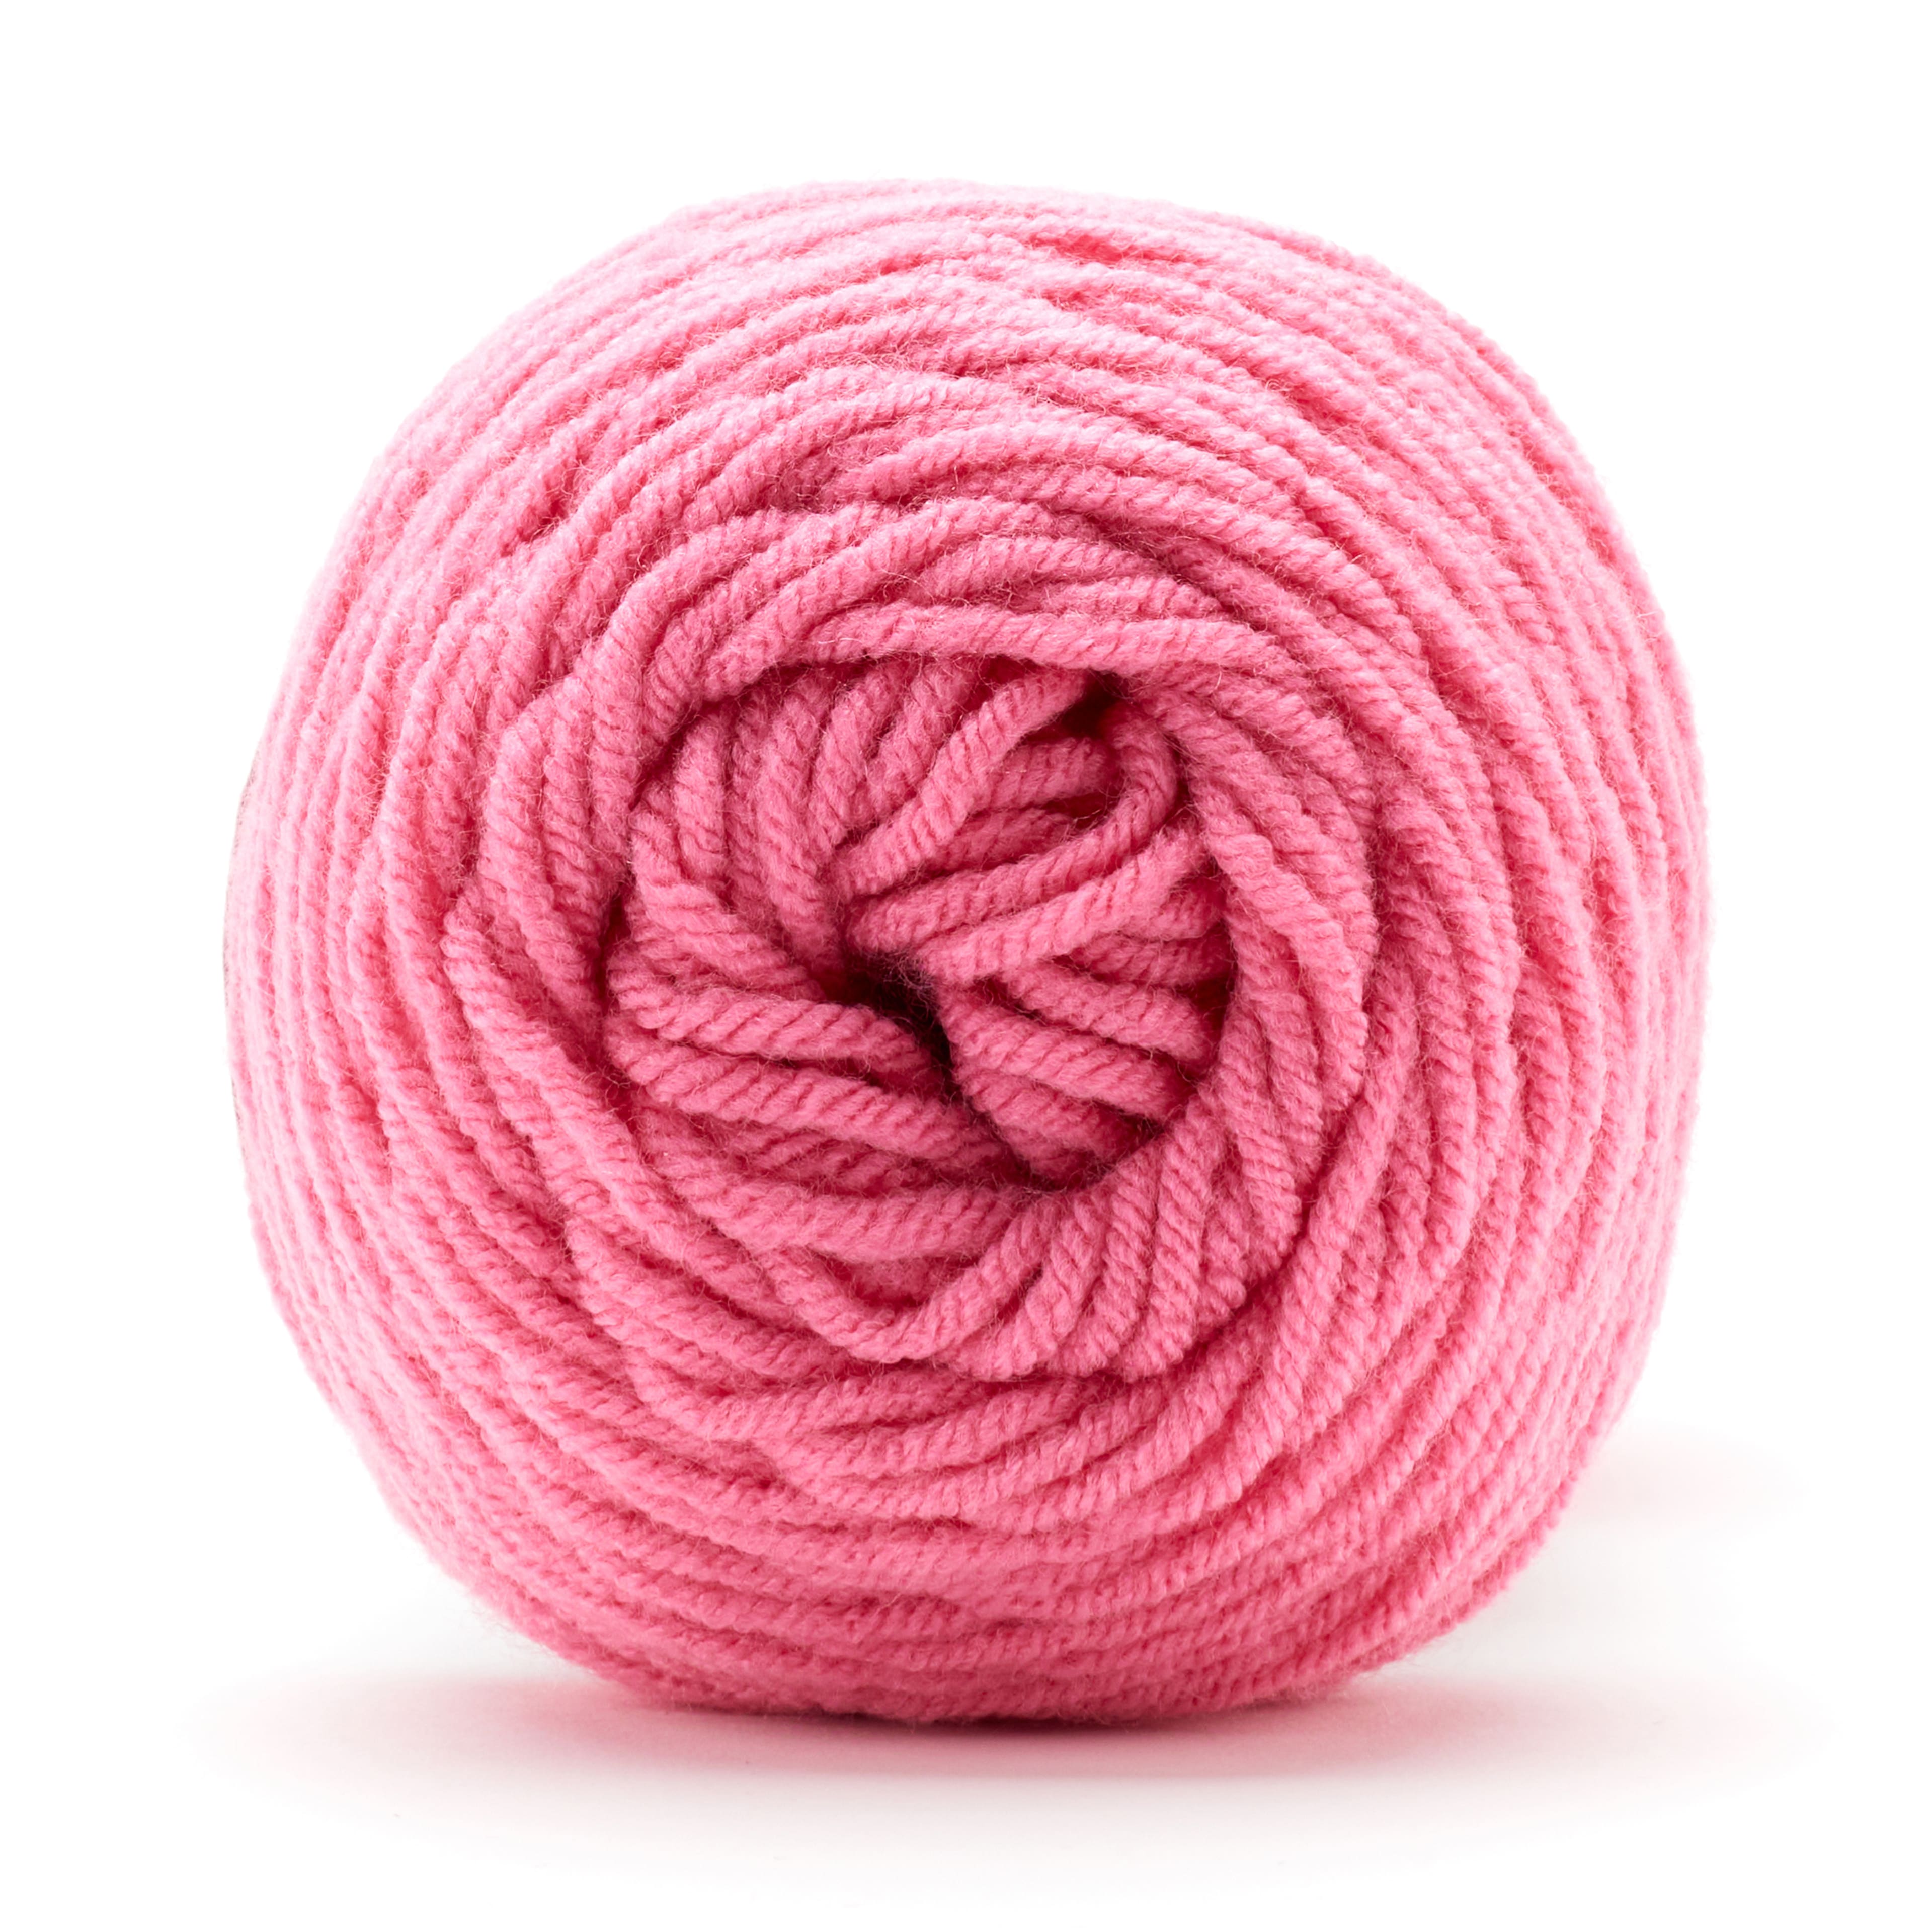 Michaels Bulk 12 Pack: Soft Classic Multi Yarn by Loops & Threads